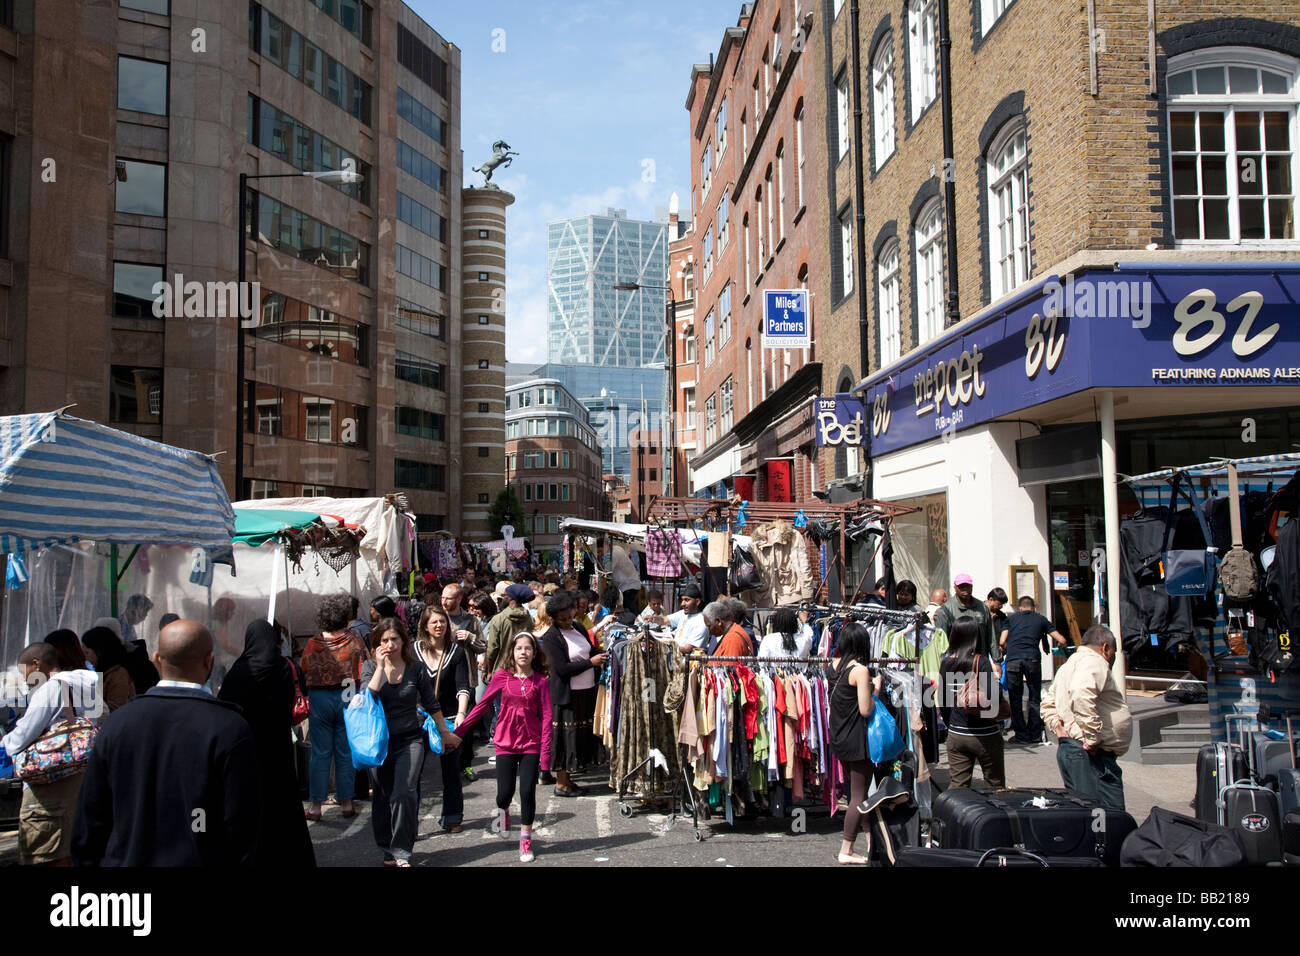 Petticoat Lane Market Middlesex Street and Wentworth Street London E1 Stock Photo